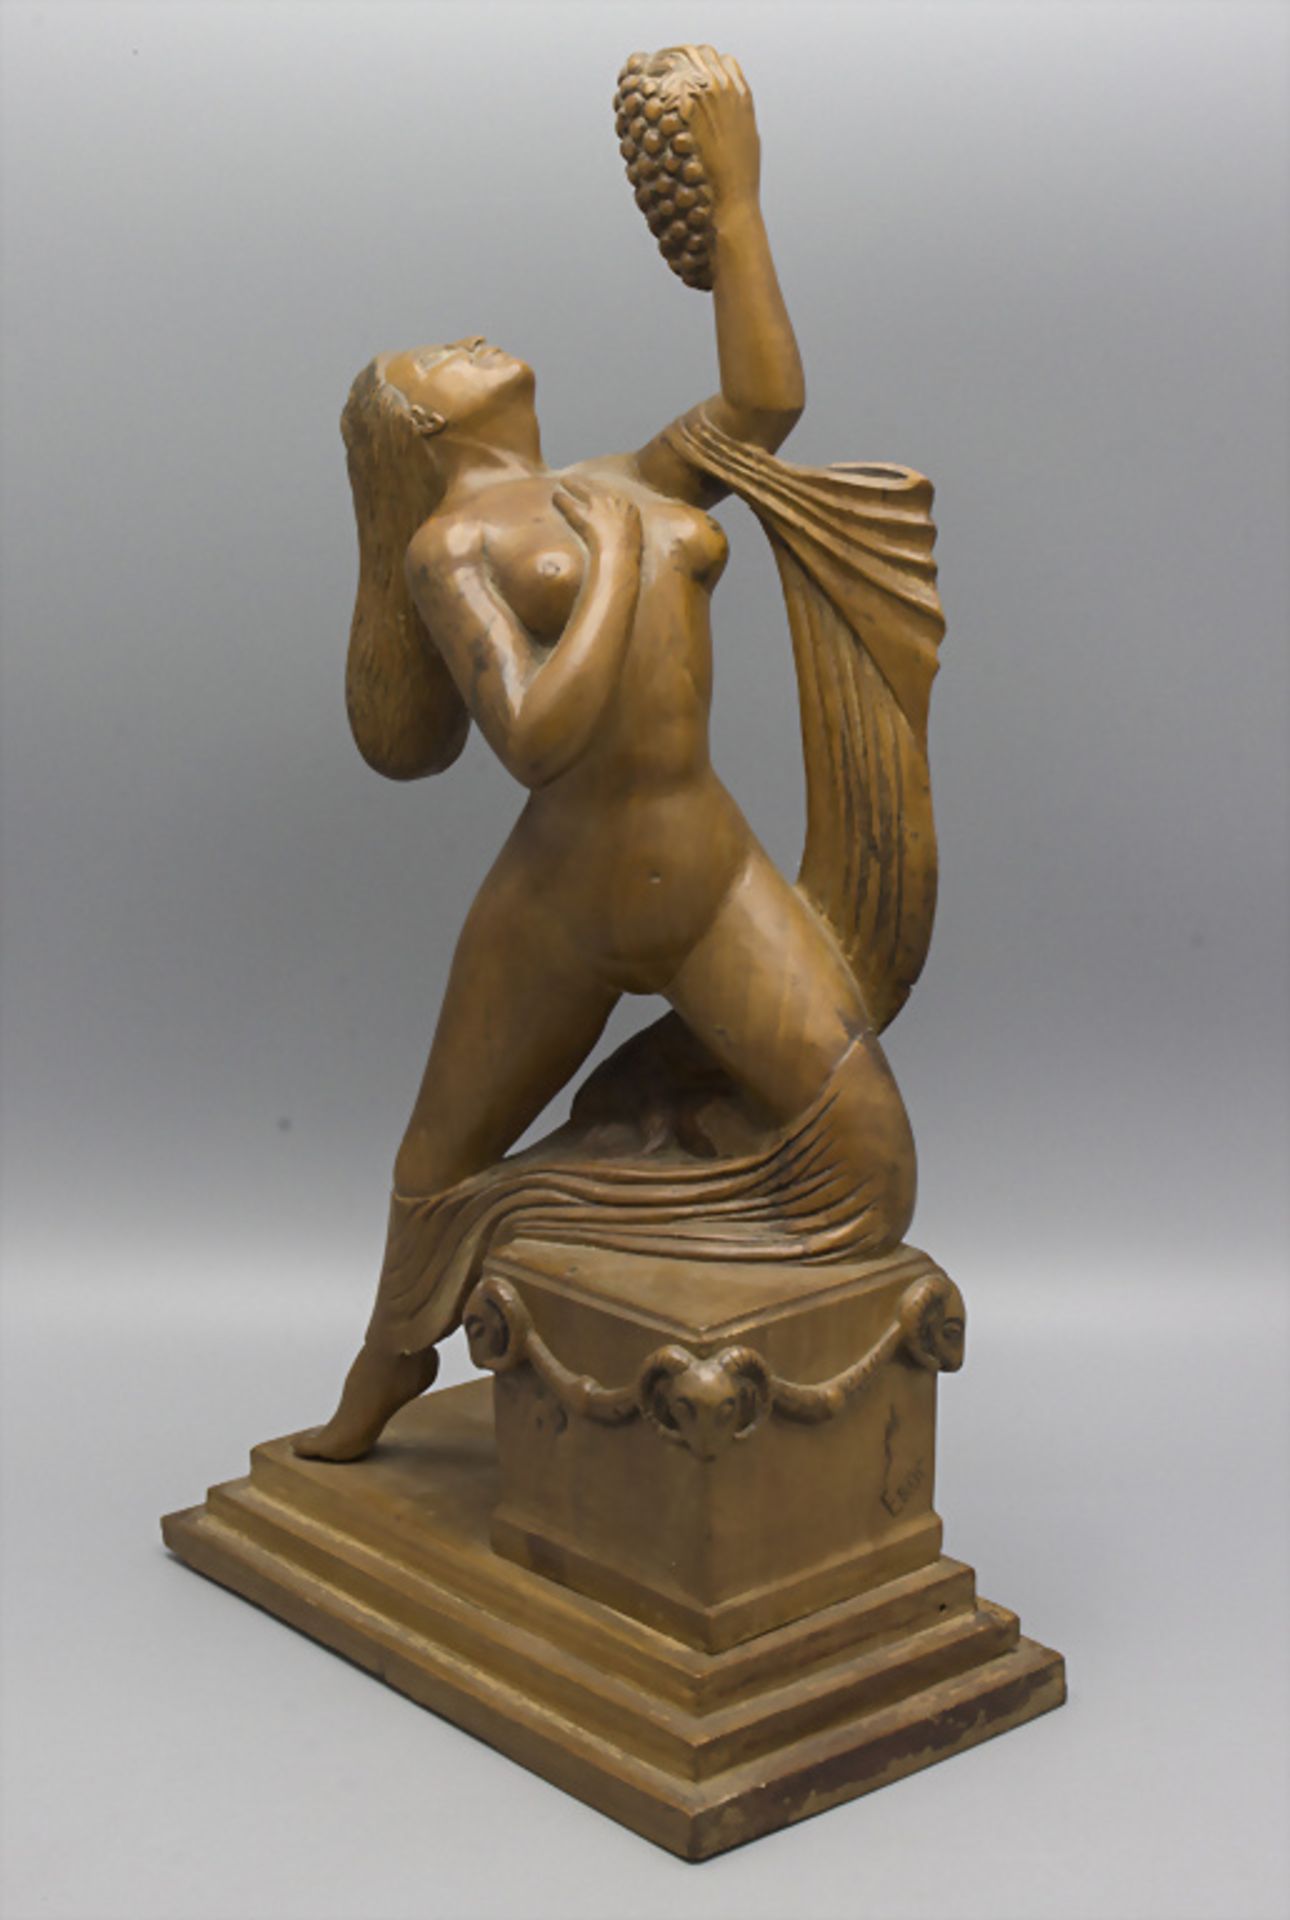 Holzskulptur 'weiblicher Akt mit Trauben' / A wooden scultpture of a female nude with grapes, ... - Image 2 of 5